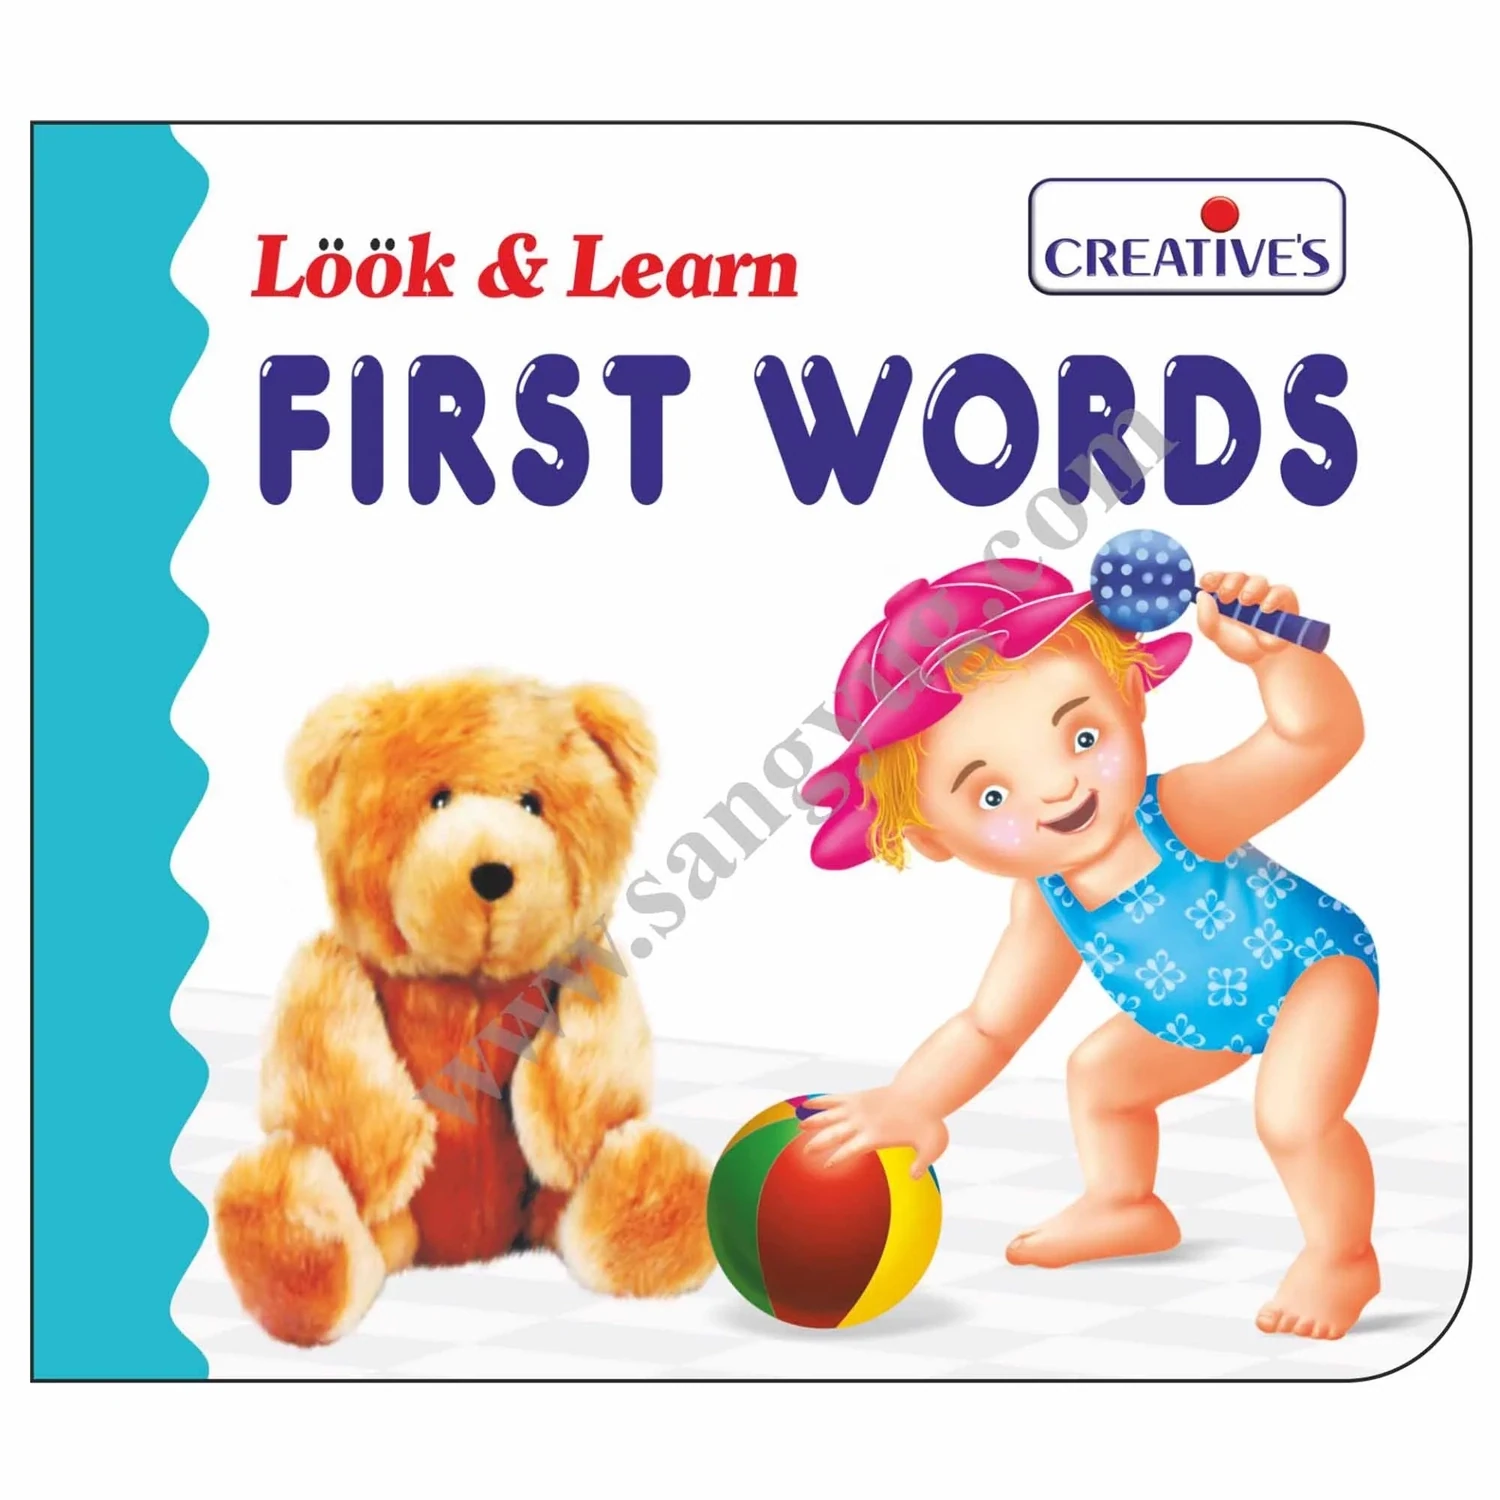 Creative look & learn board book -First Words 579